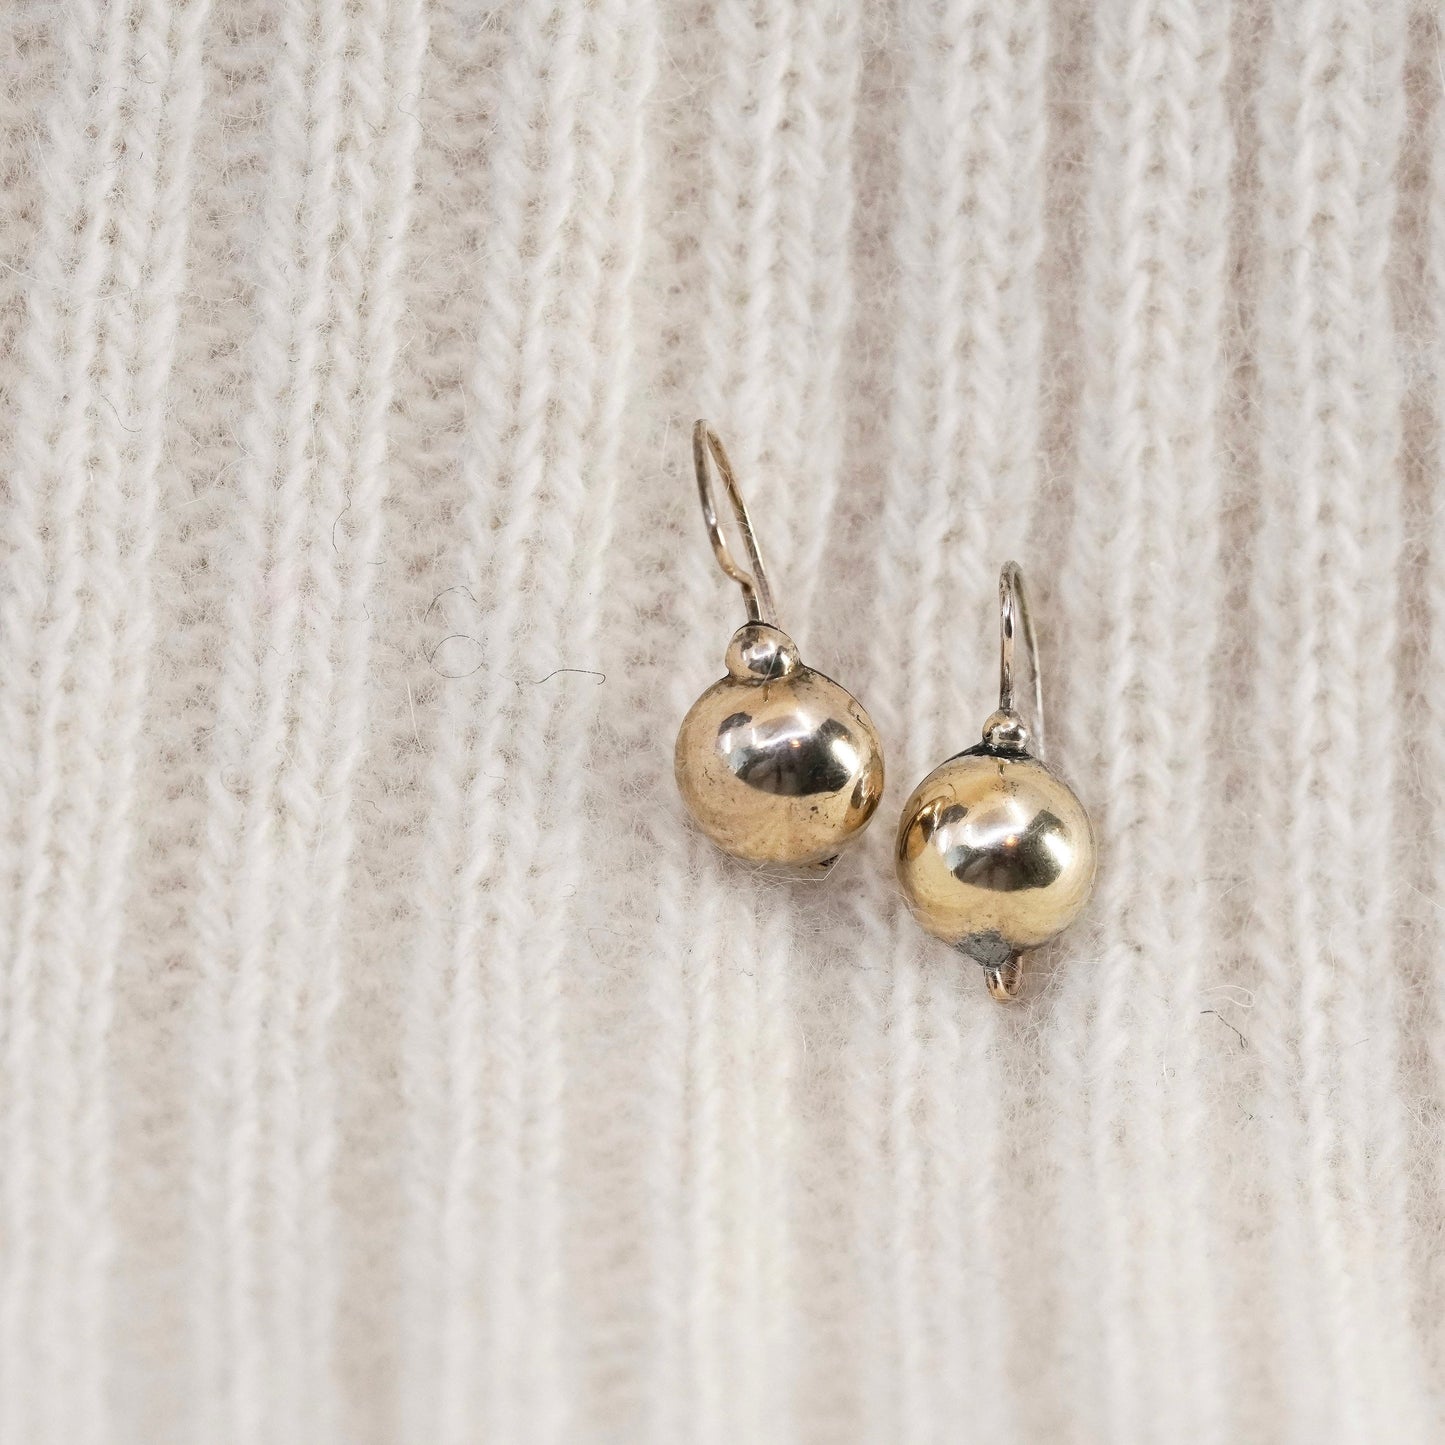 Vintage vermeil gold over sterling silver earrings, 925 bead dangles